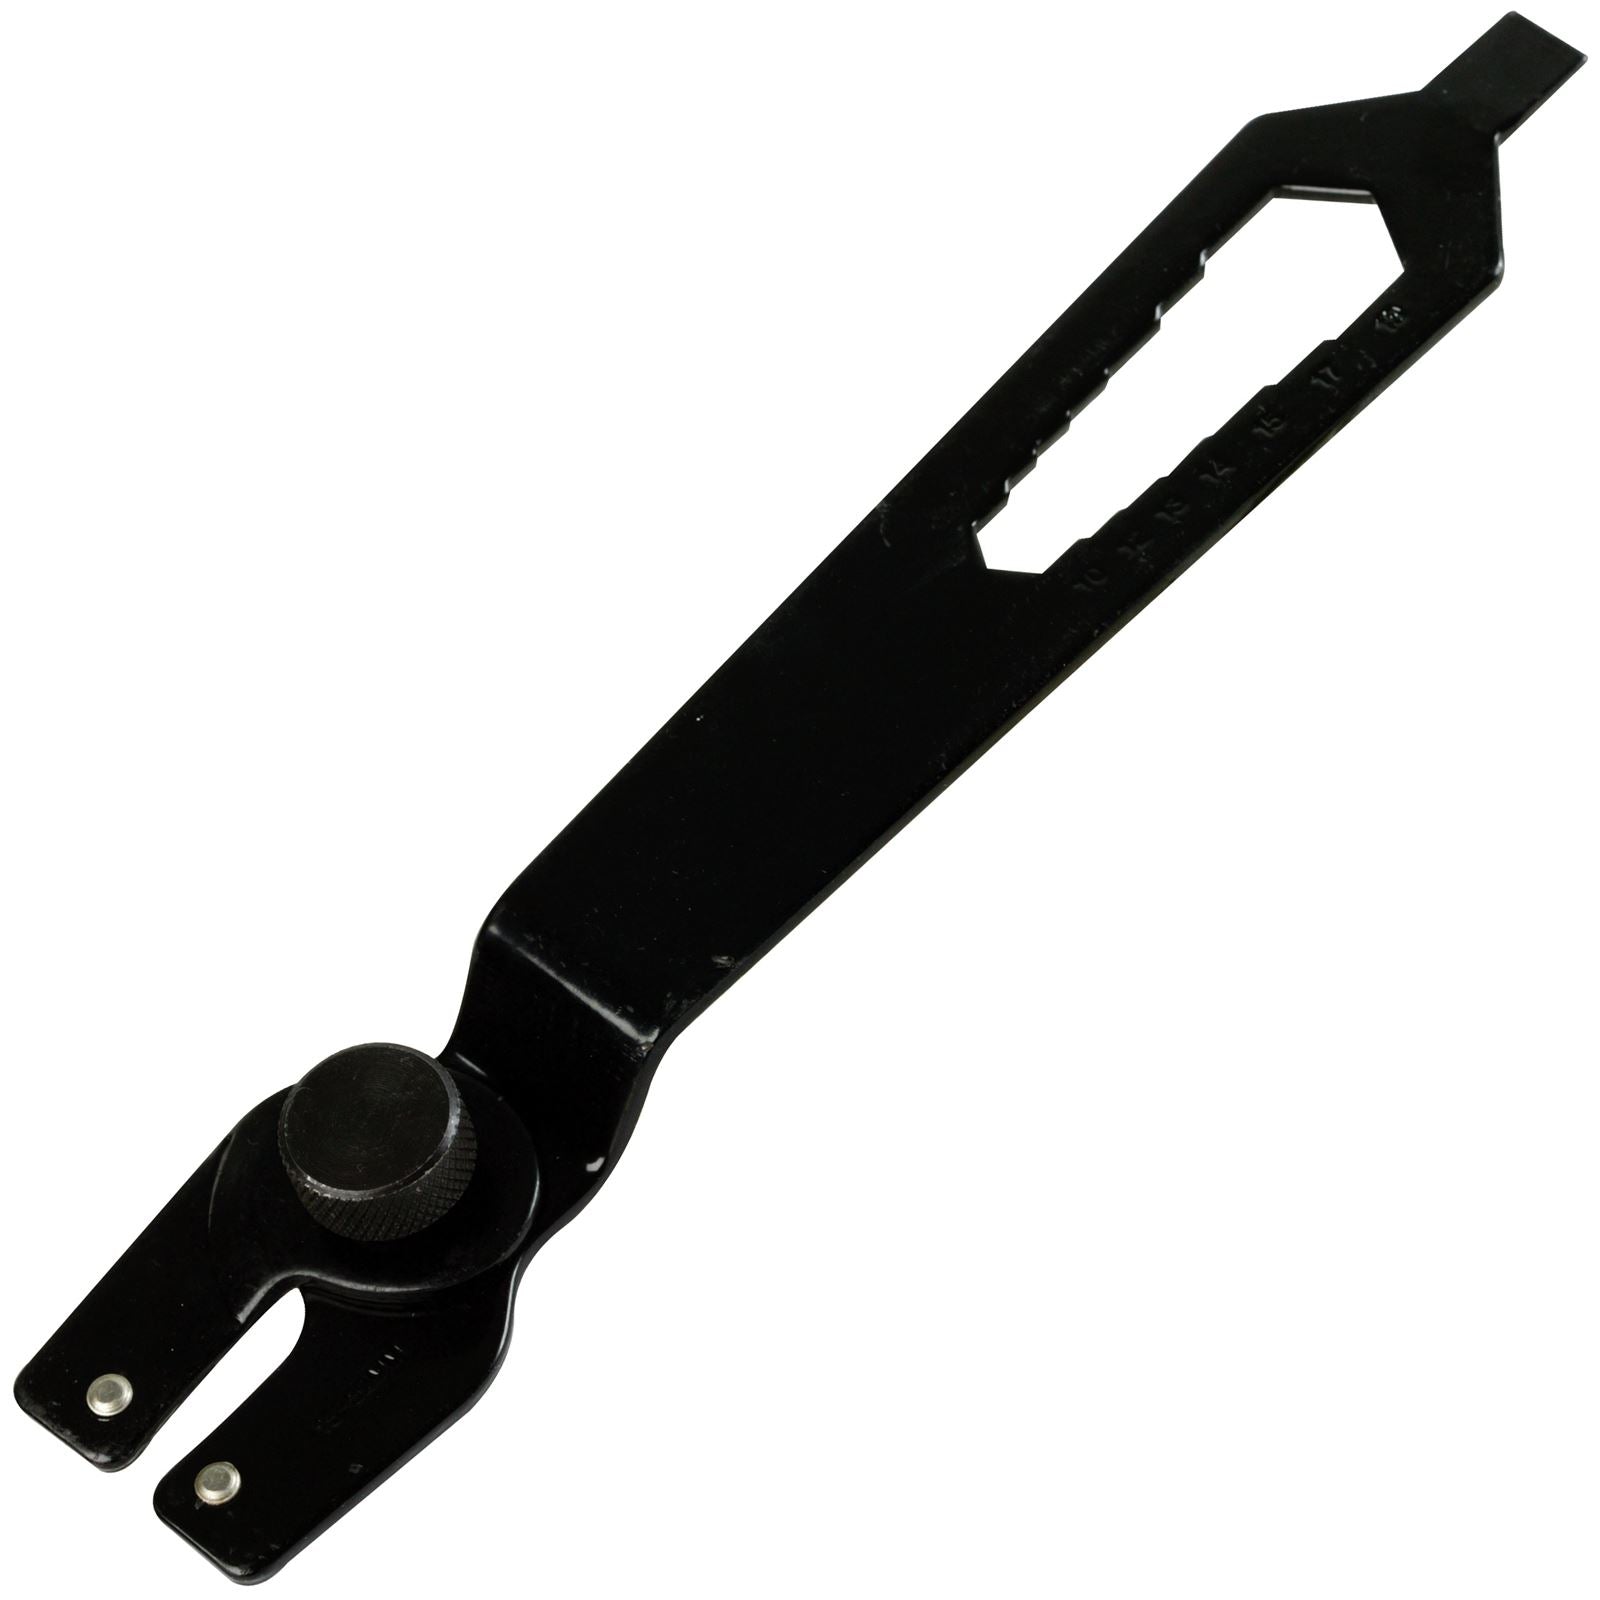 Silverline Adjustable Pin Wrench 15-52mm Angle Bench Grinder Spanner